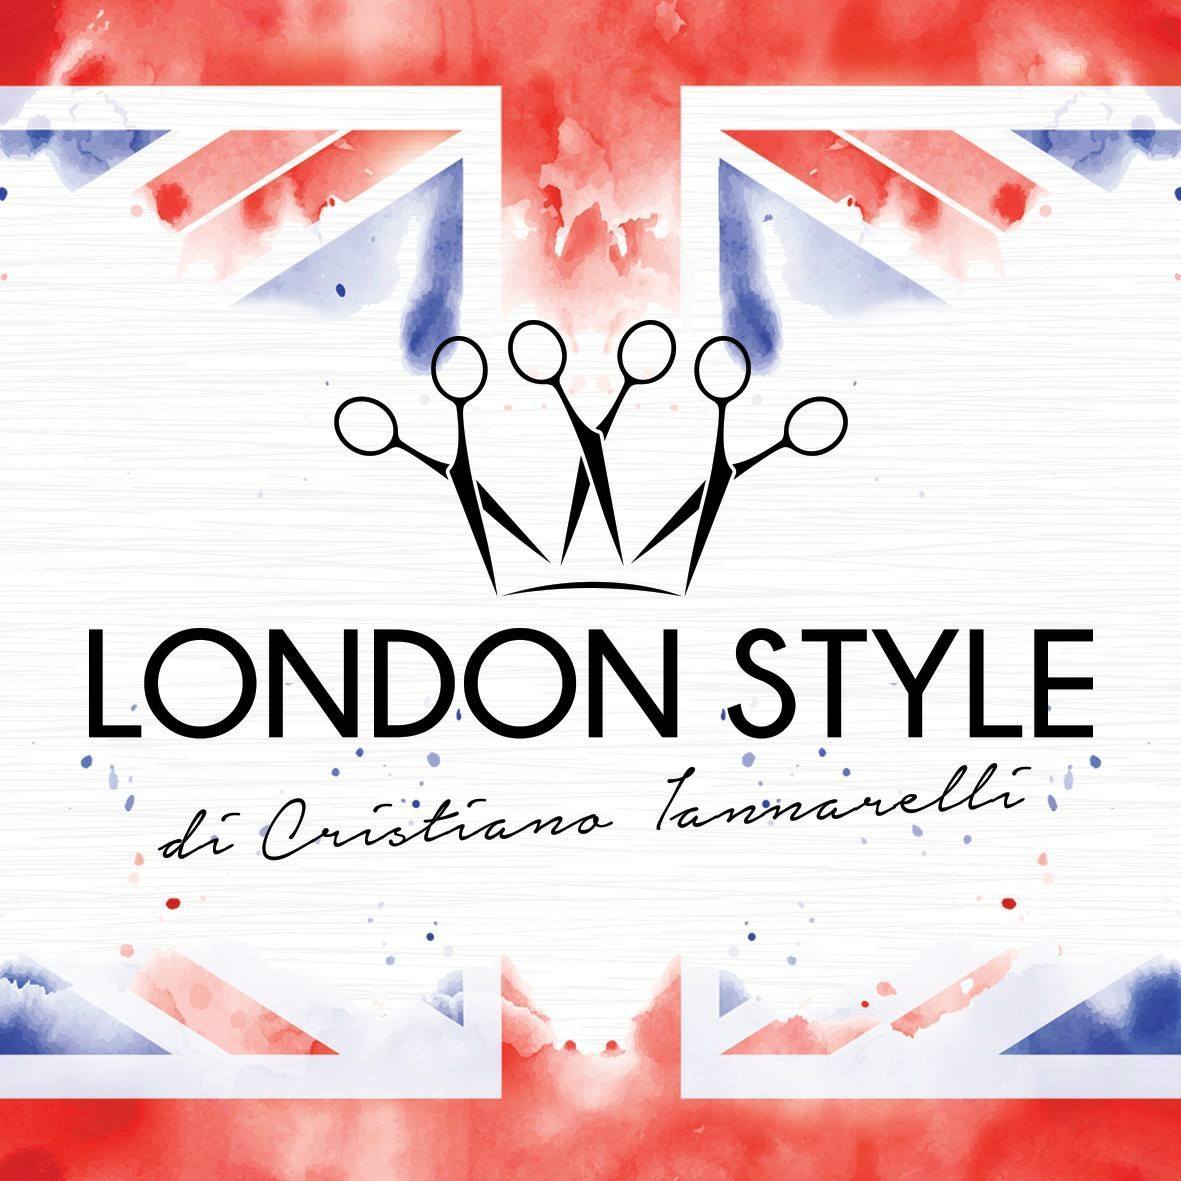 London Style Hair Salon